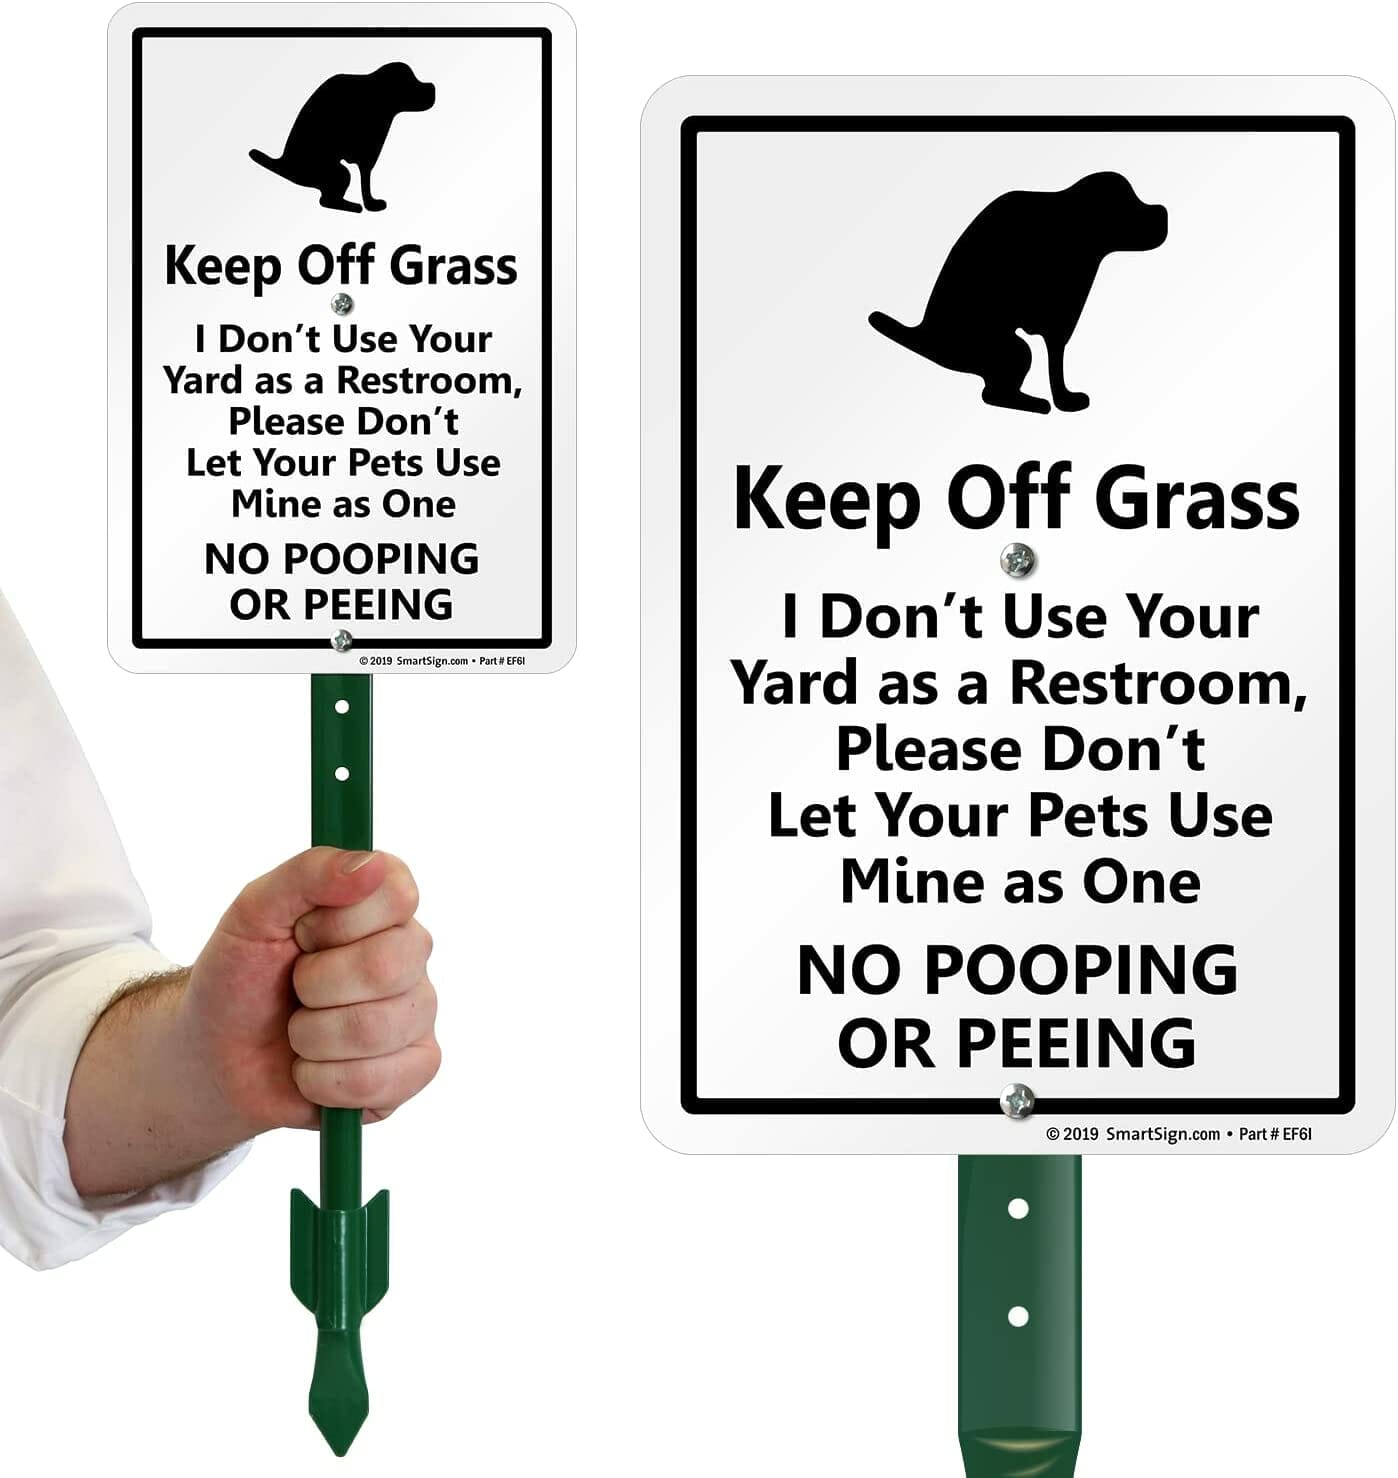 SmartSign "Keep Off Grass" Sign